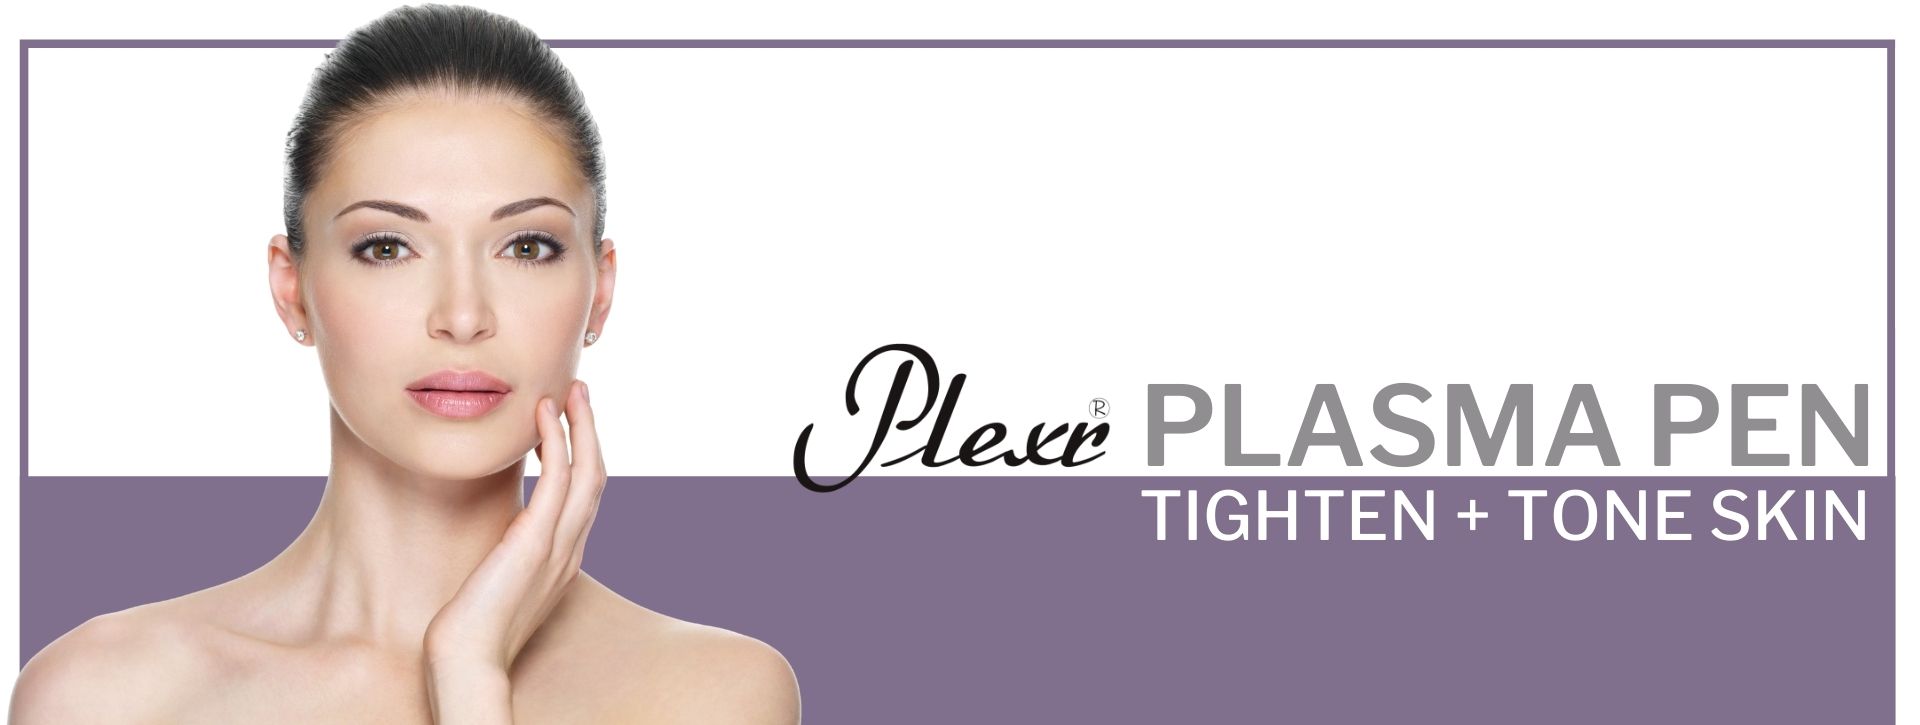 Closeup of beautiful woman promoting a Plexr plasma pen treatment